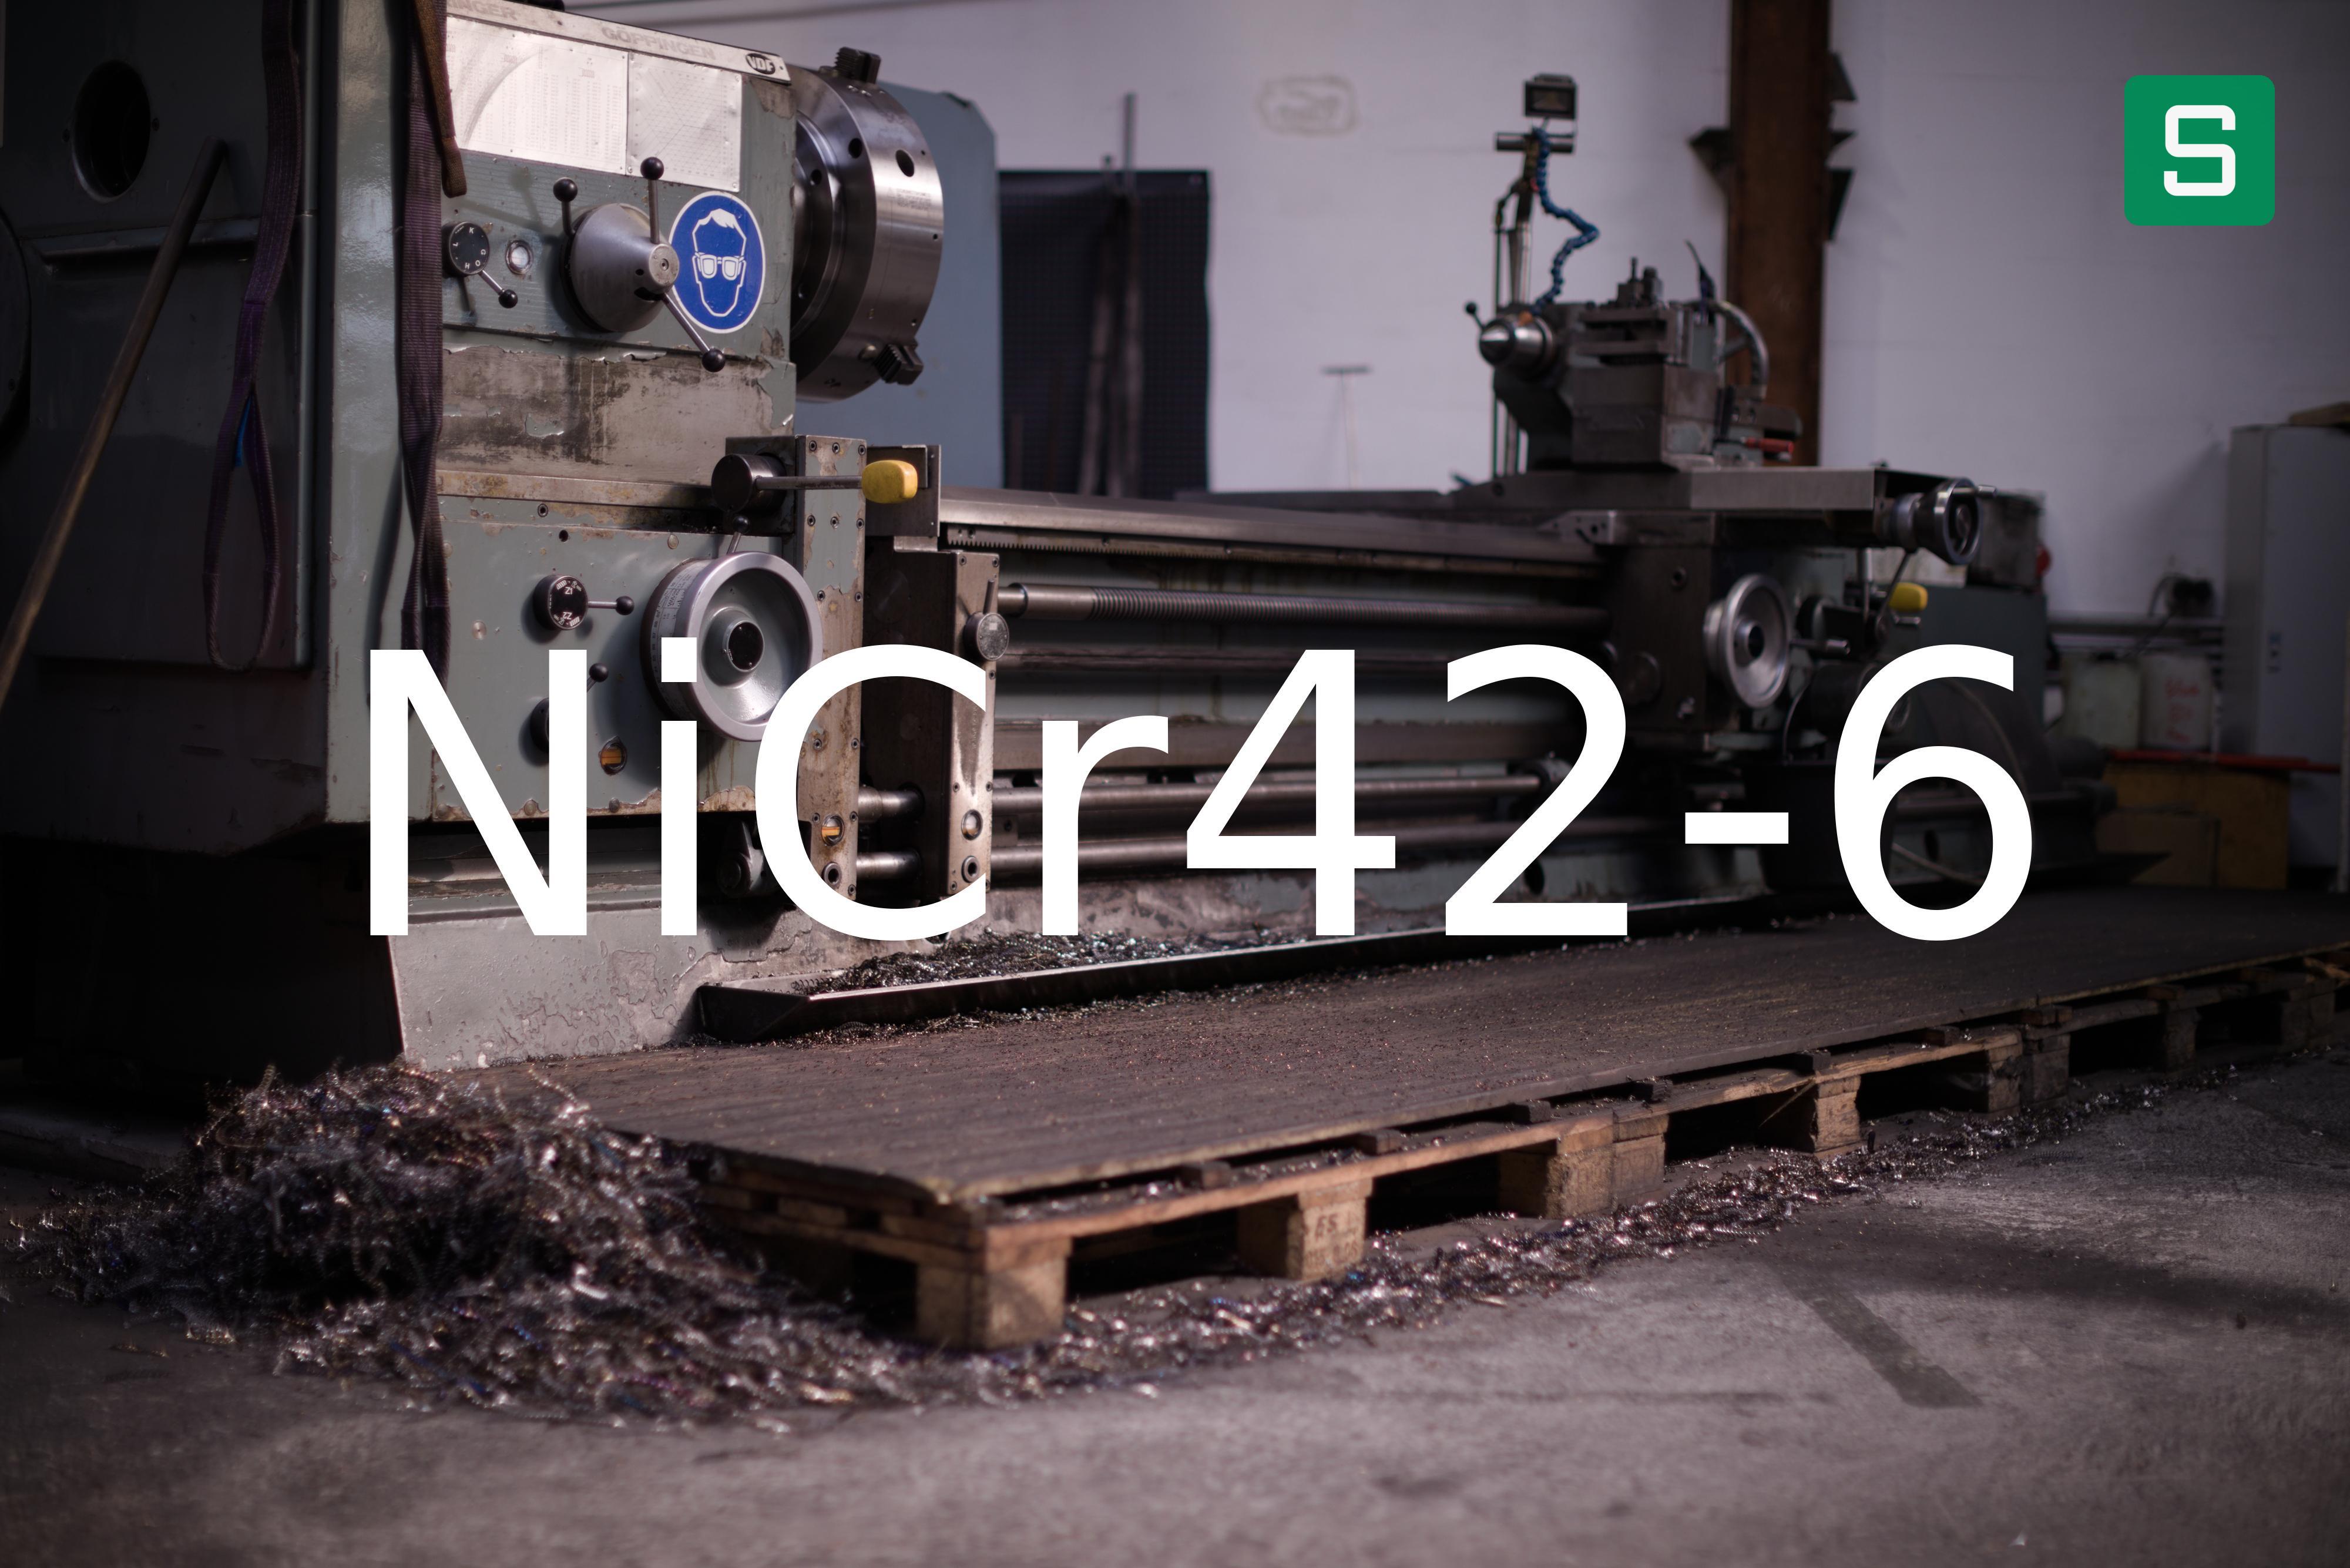 Steel Material: NiCr42-6